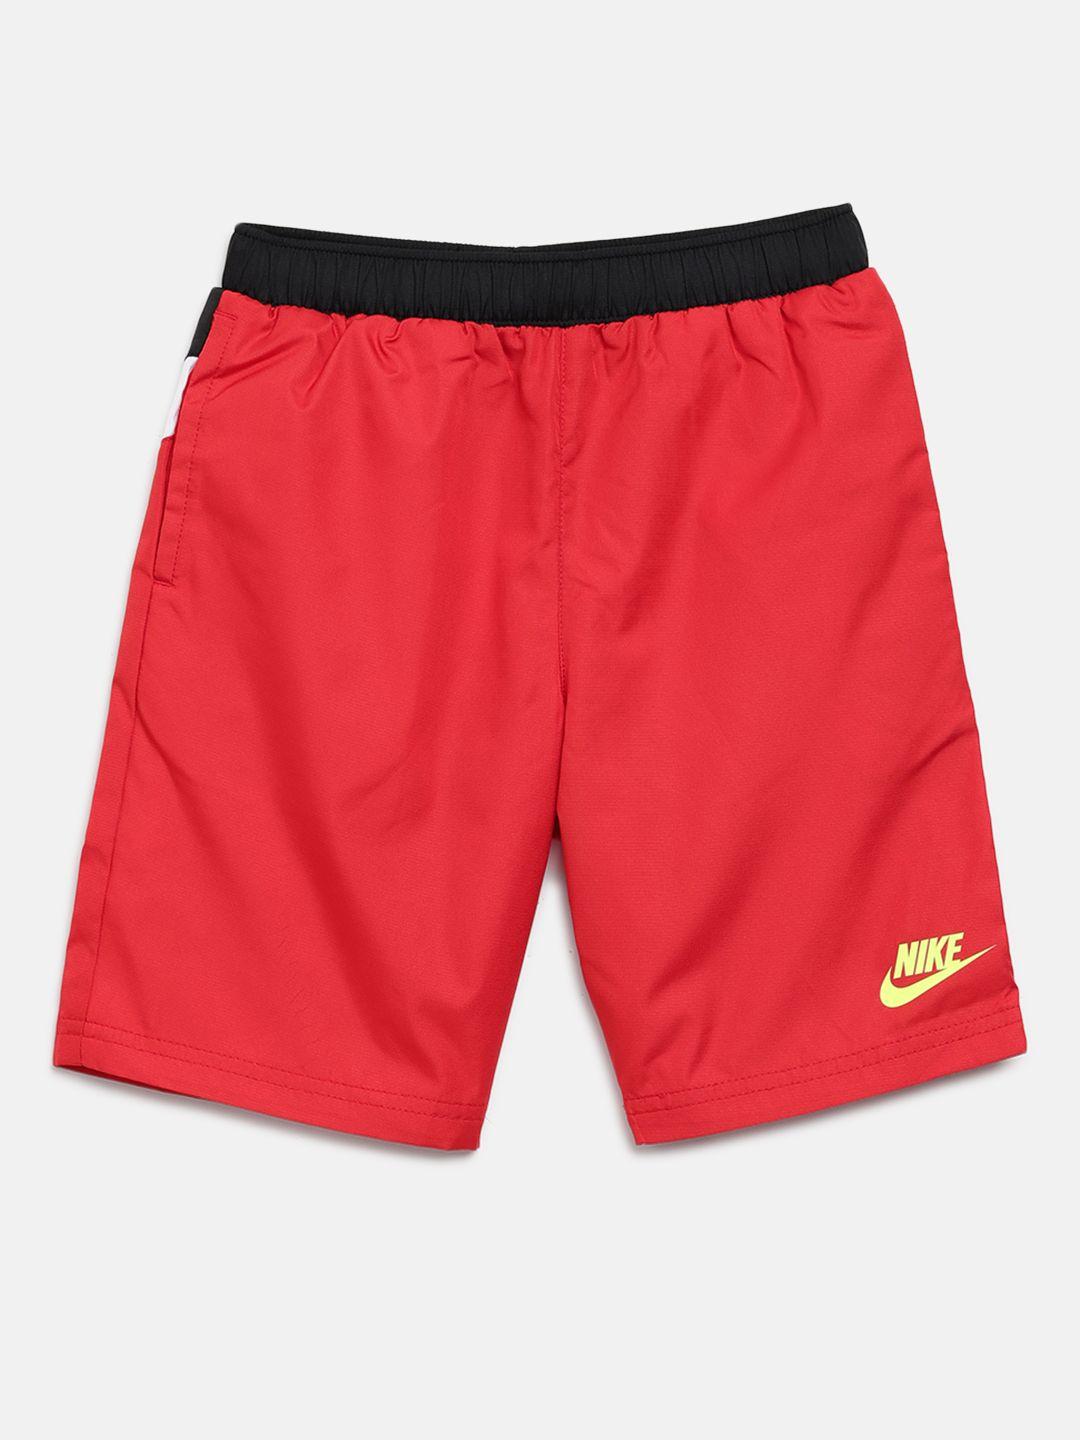 nike-boys-red-&-black-solid-oversized-swoosh-sports-shorts